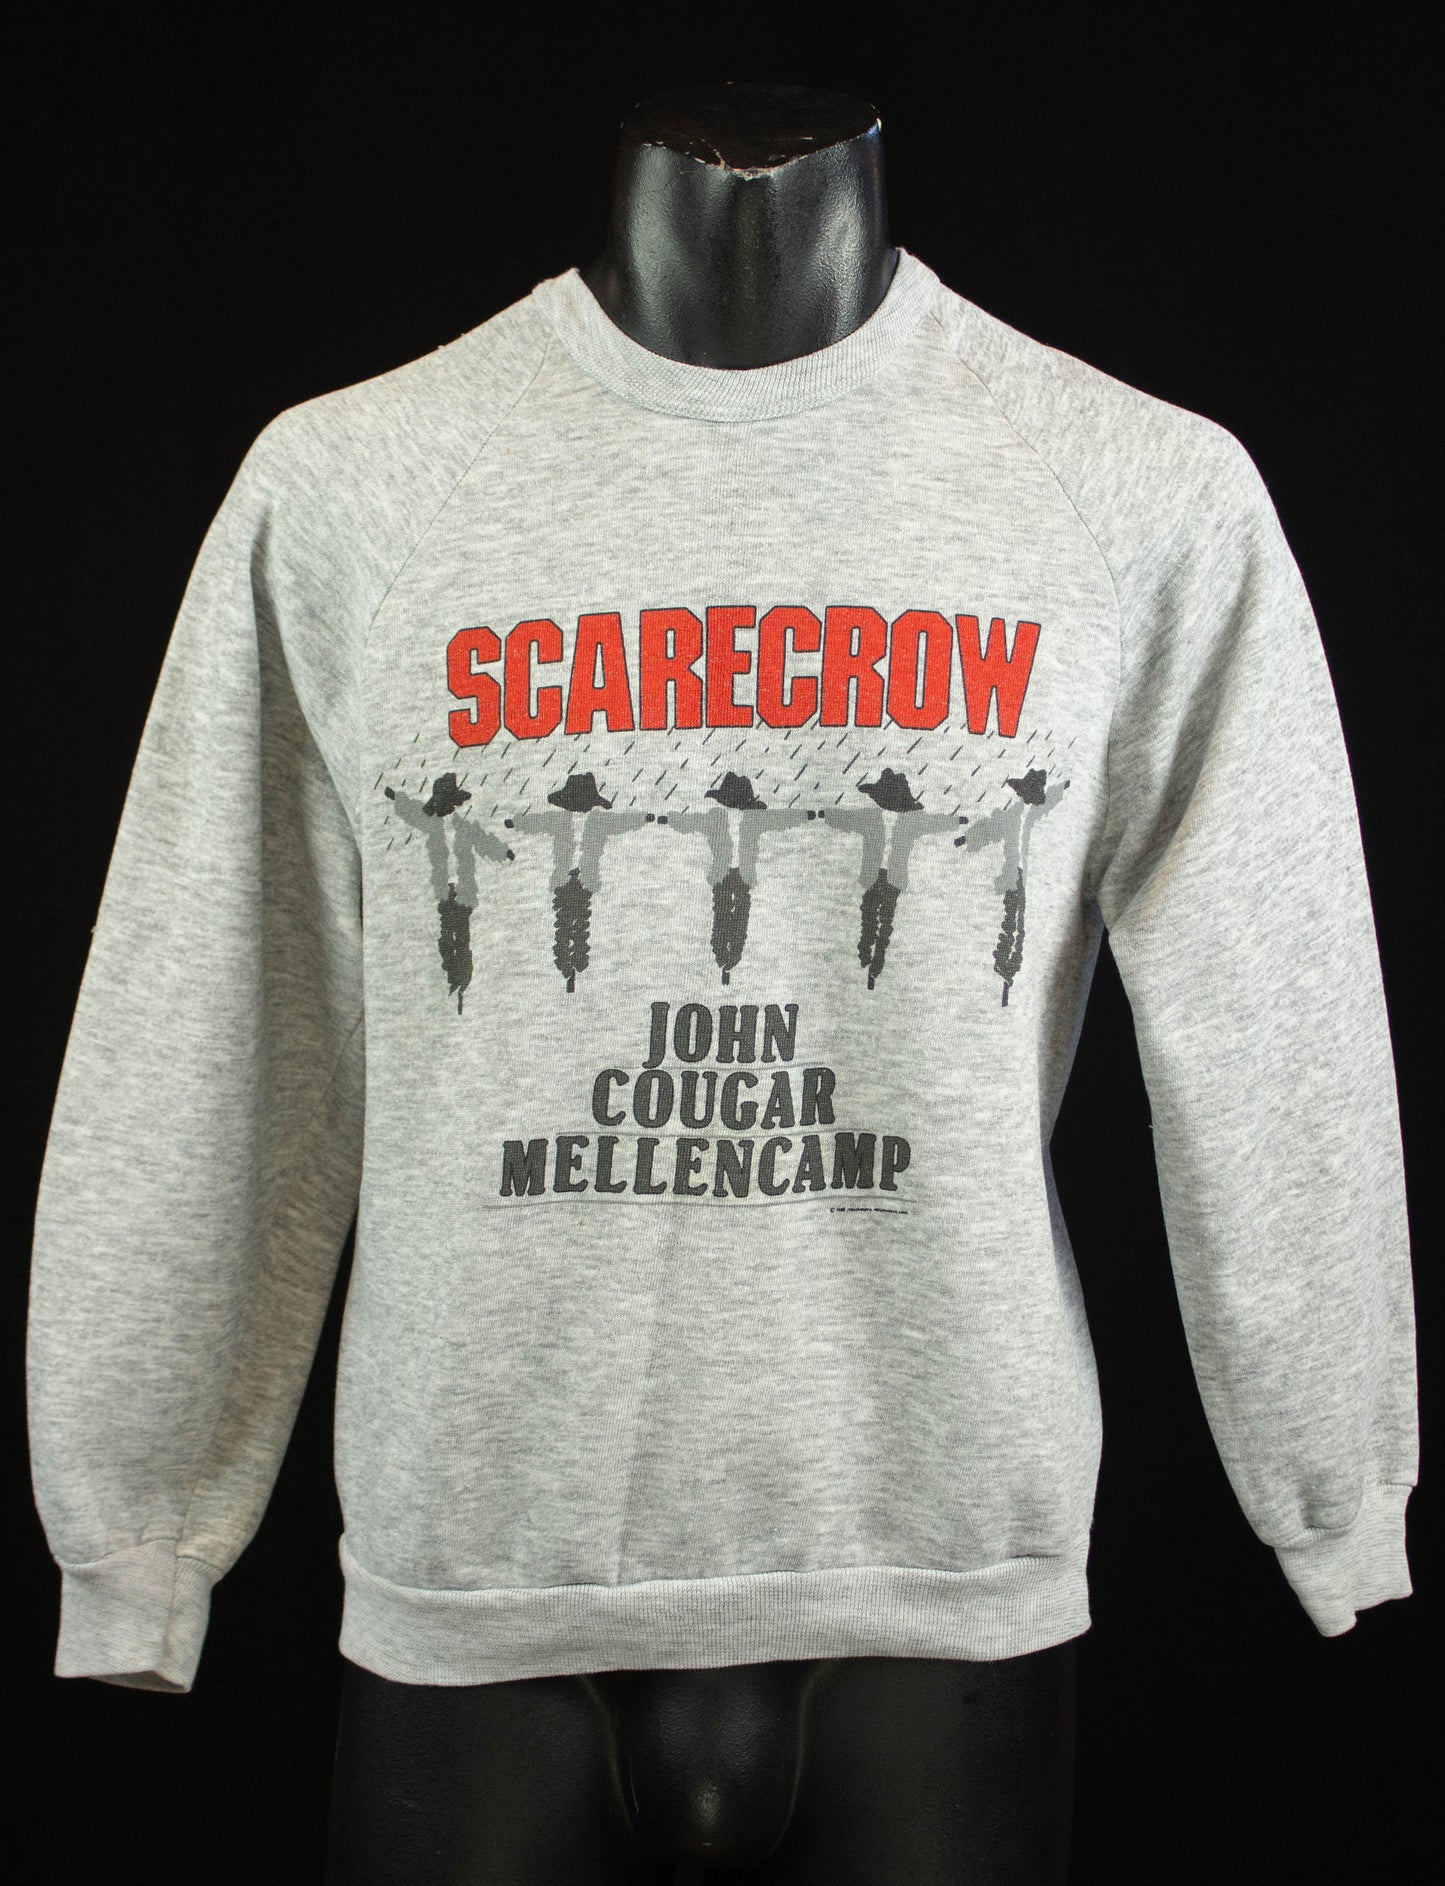 Vintage John Cougar Mellencamp Concert Crewneck Sweatshirt 1985 Scarecrow Heather Grey Small-Medium